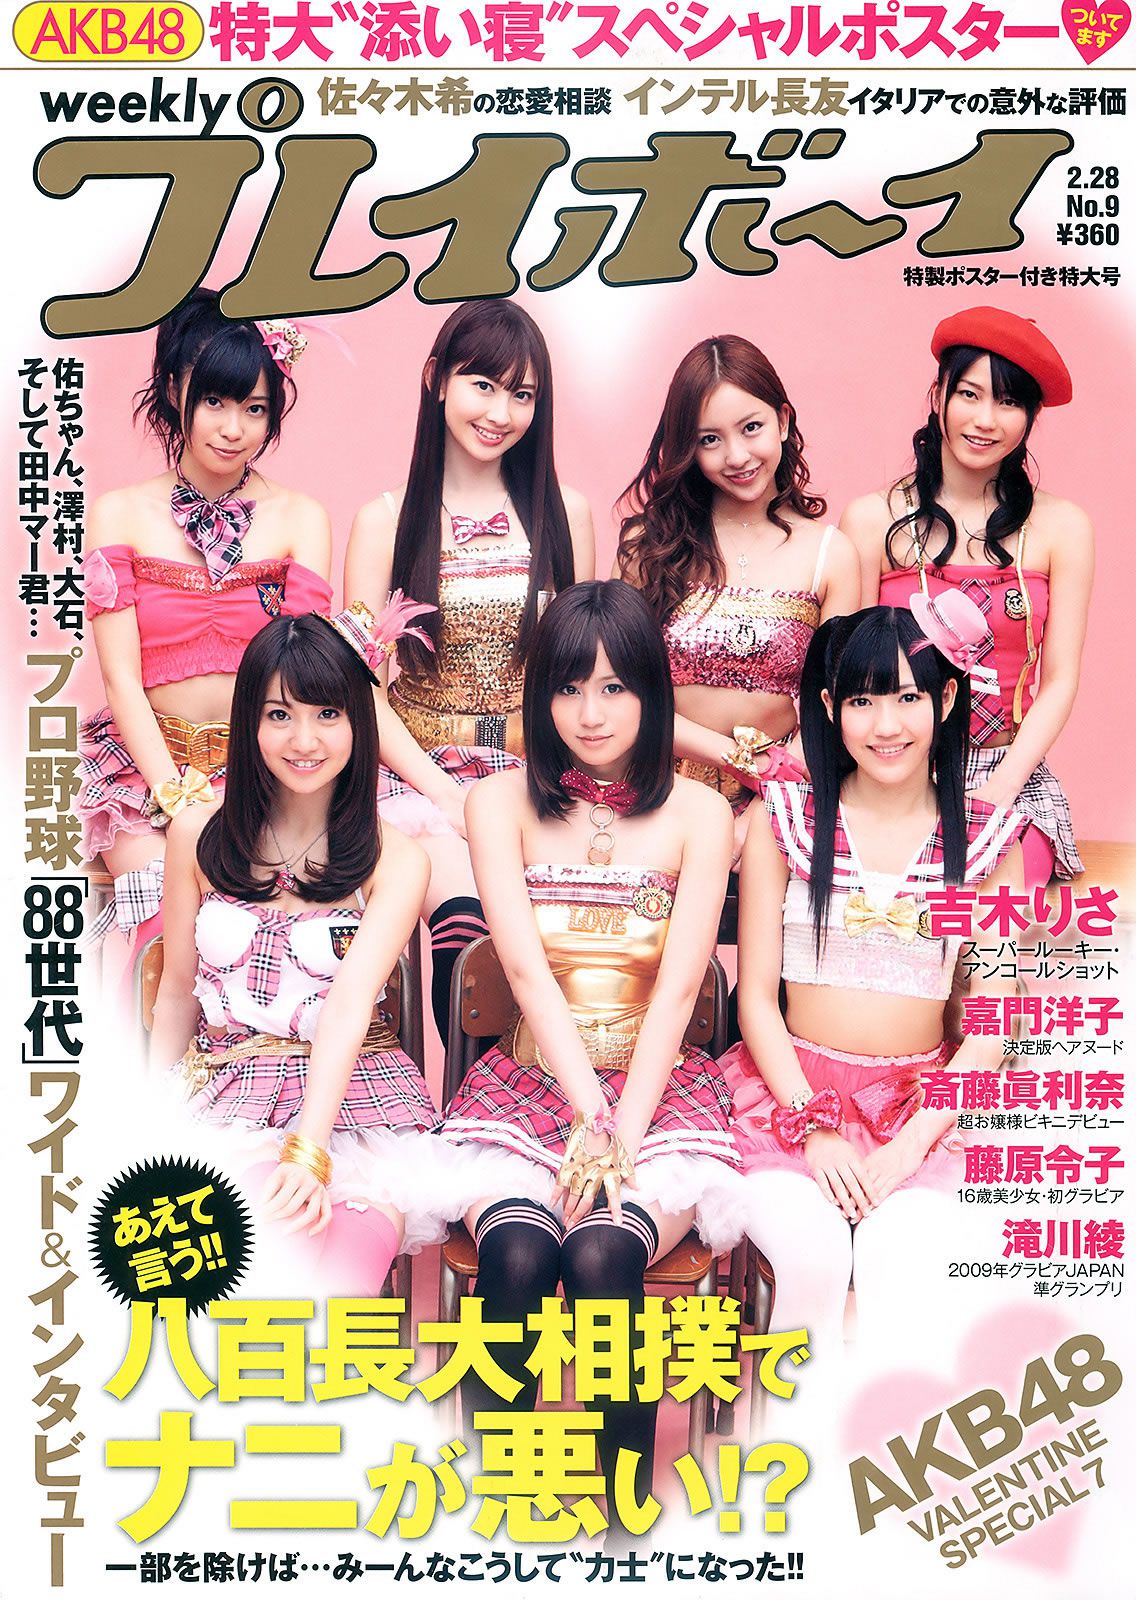 [Weekly Playboy] 2011 No.09 AKB48 吉木りさ 杉本有美 滝川綾 嘉門洋子 他 [43P]